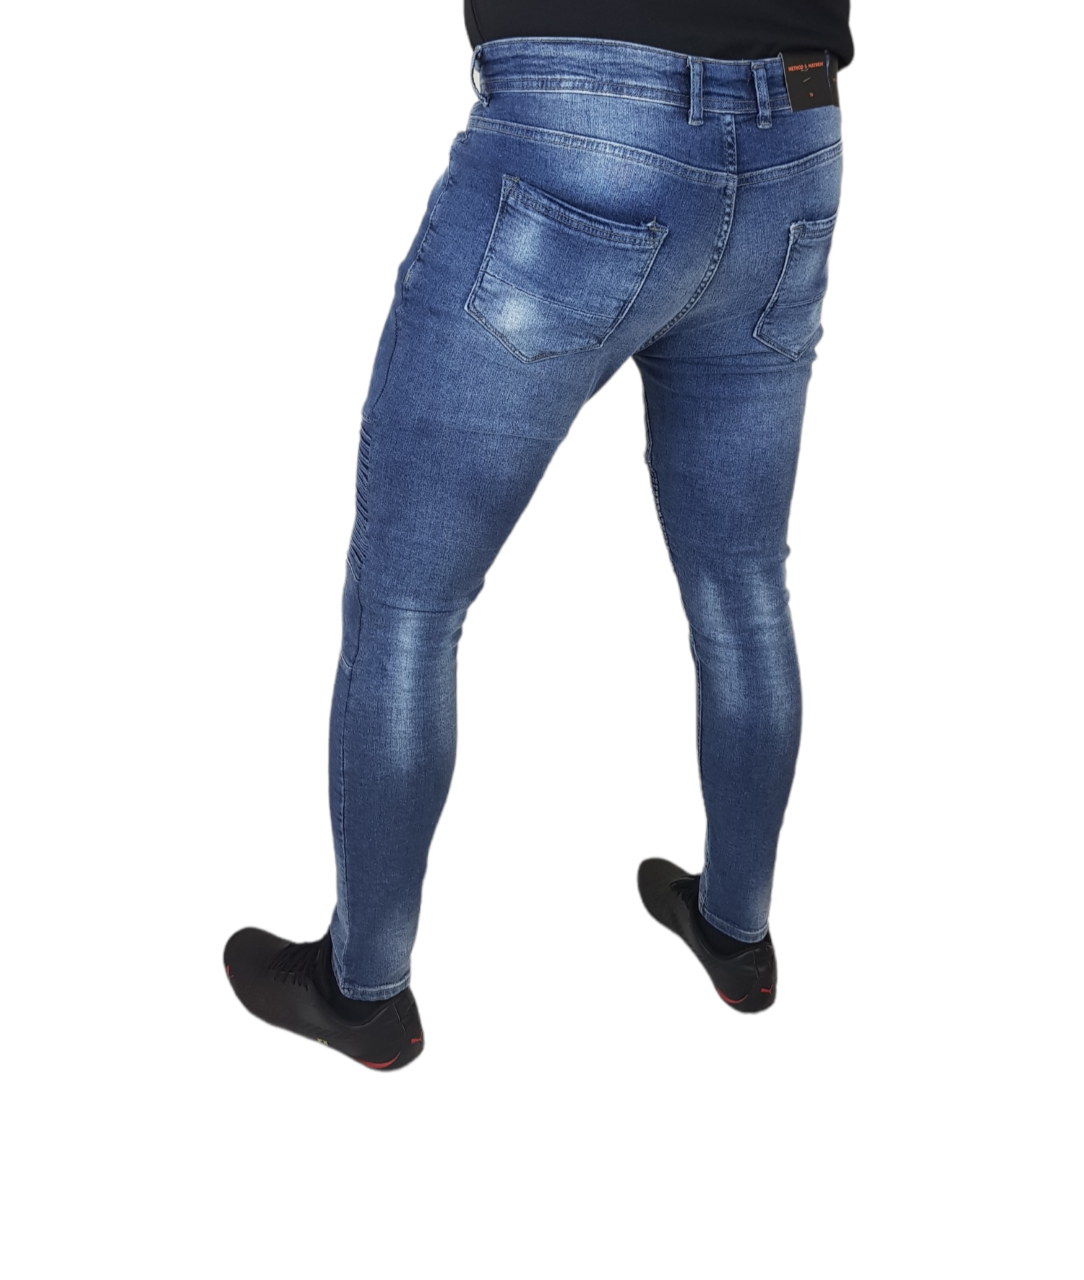 Men's Biker Skinny Fit Jeans